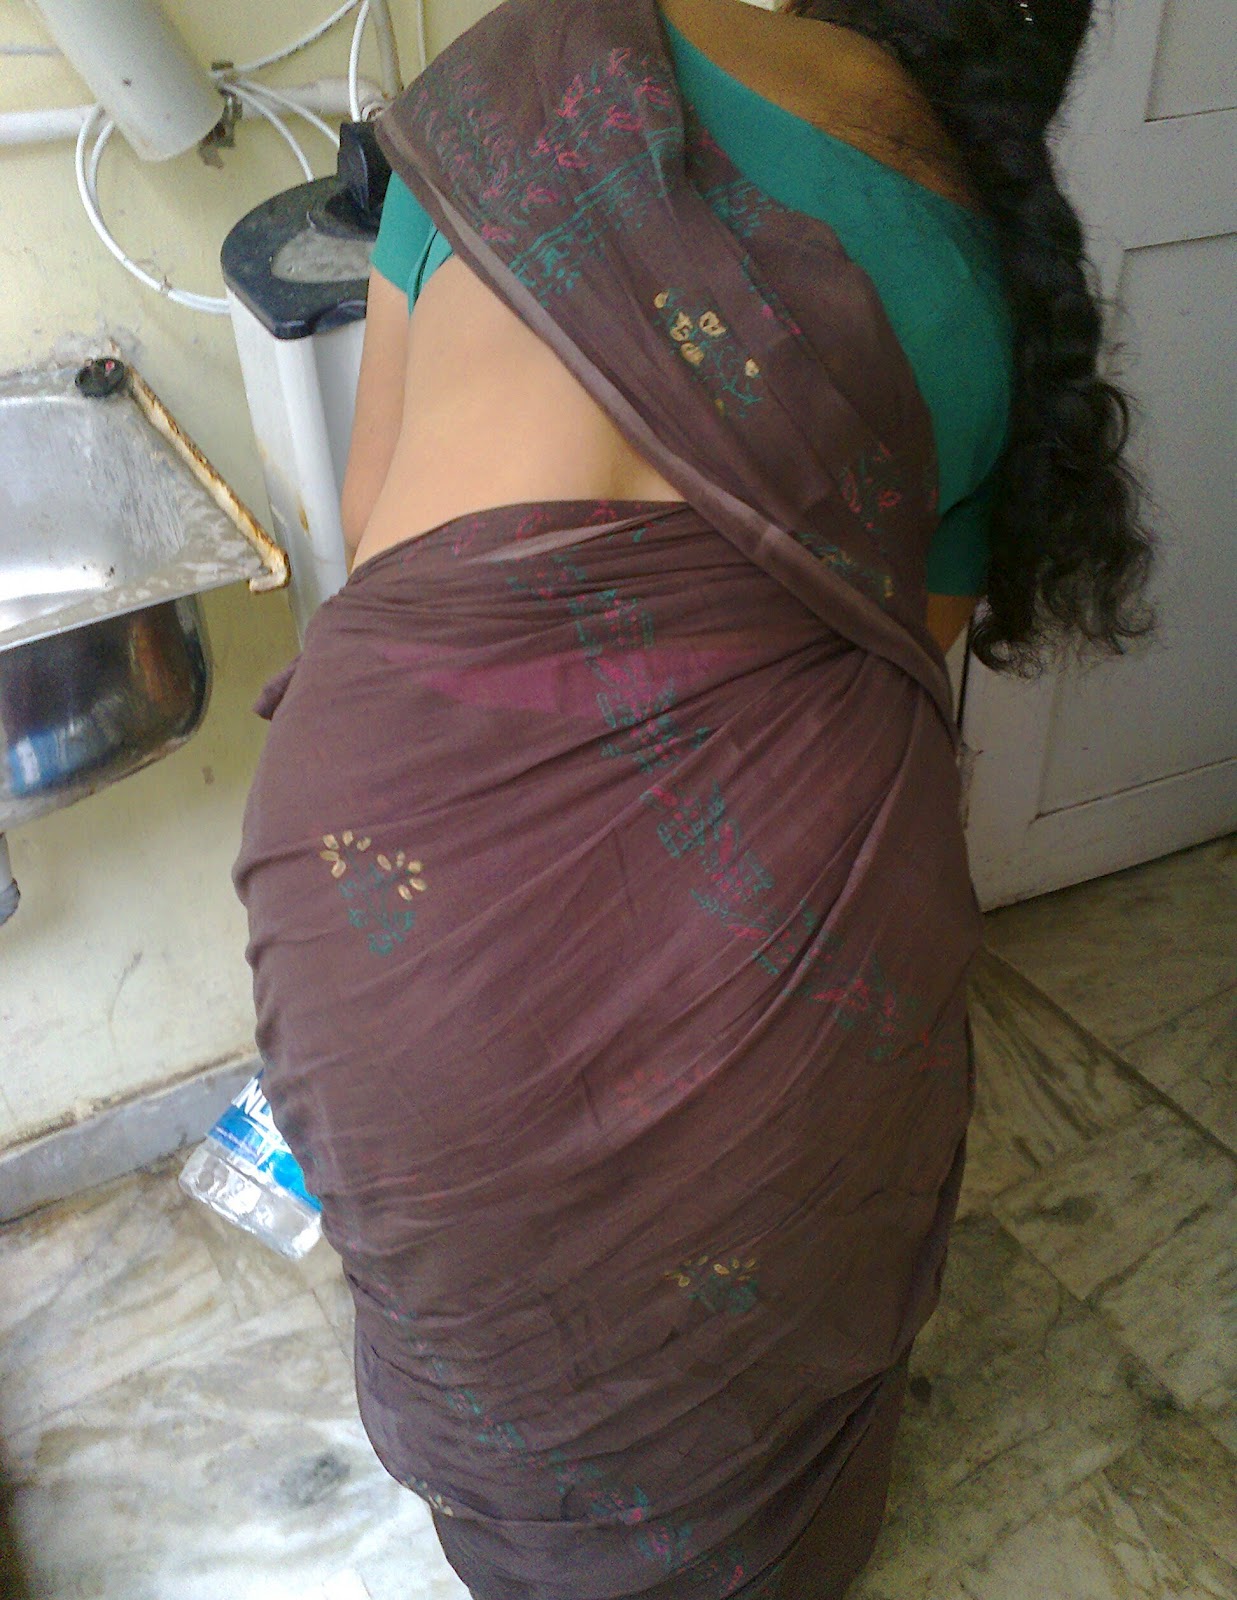 India pantyhose fabric